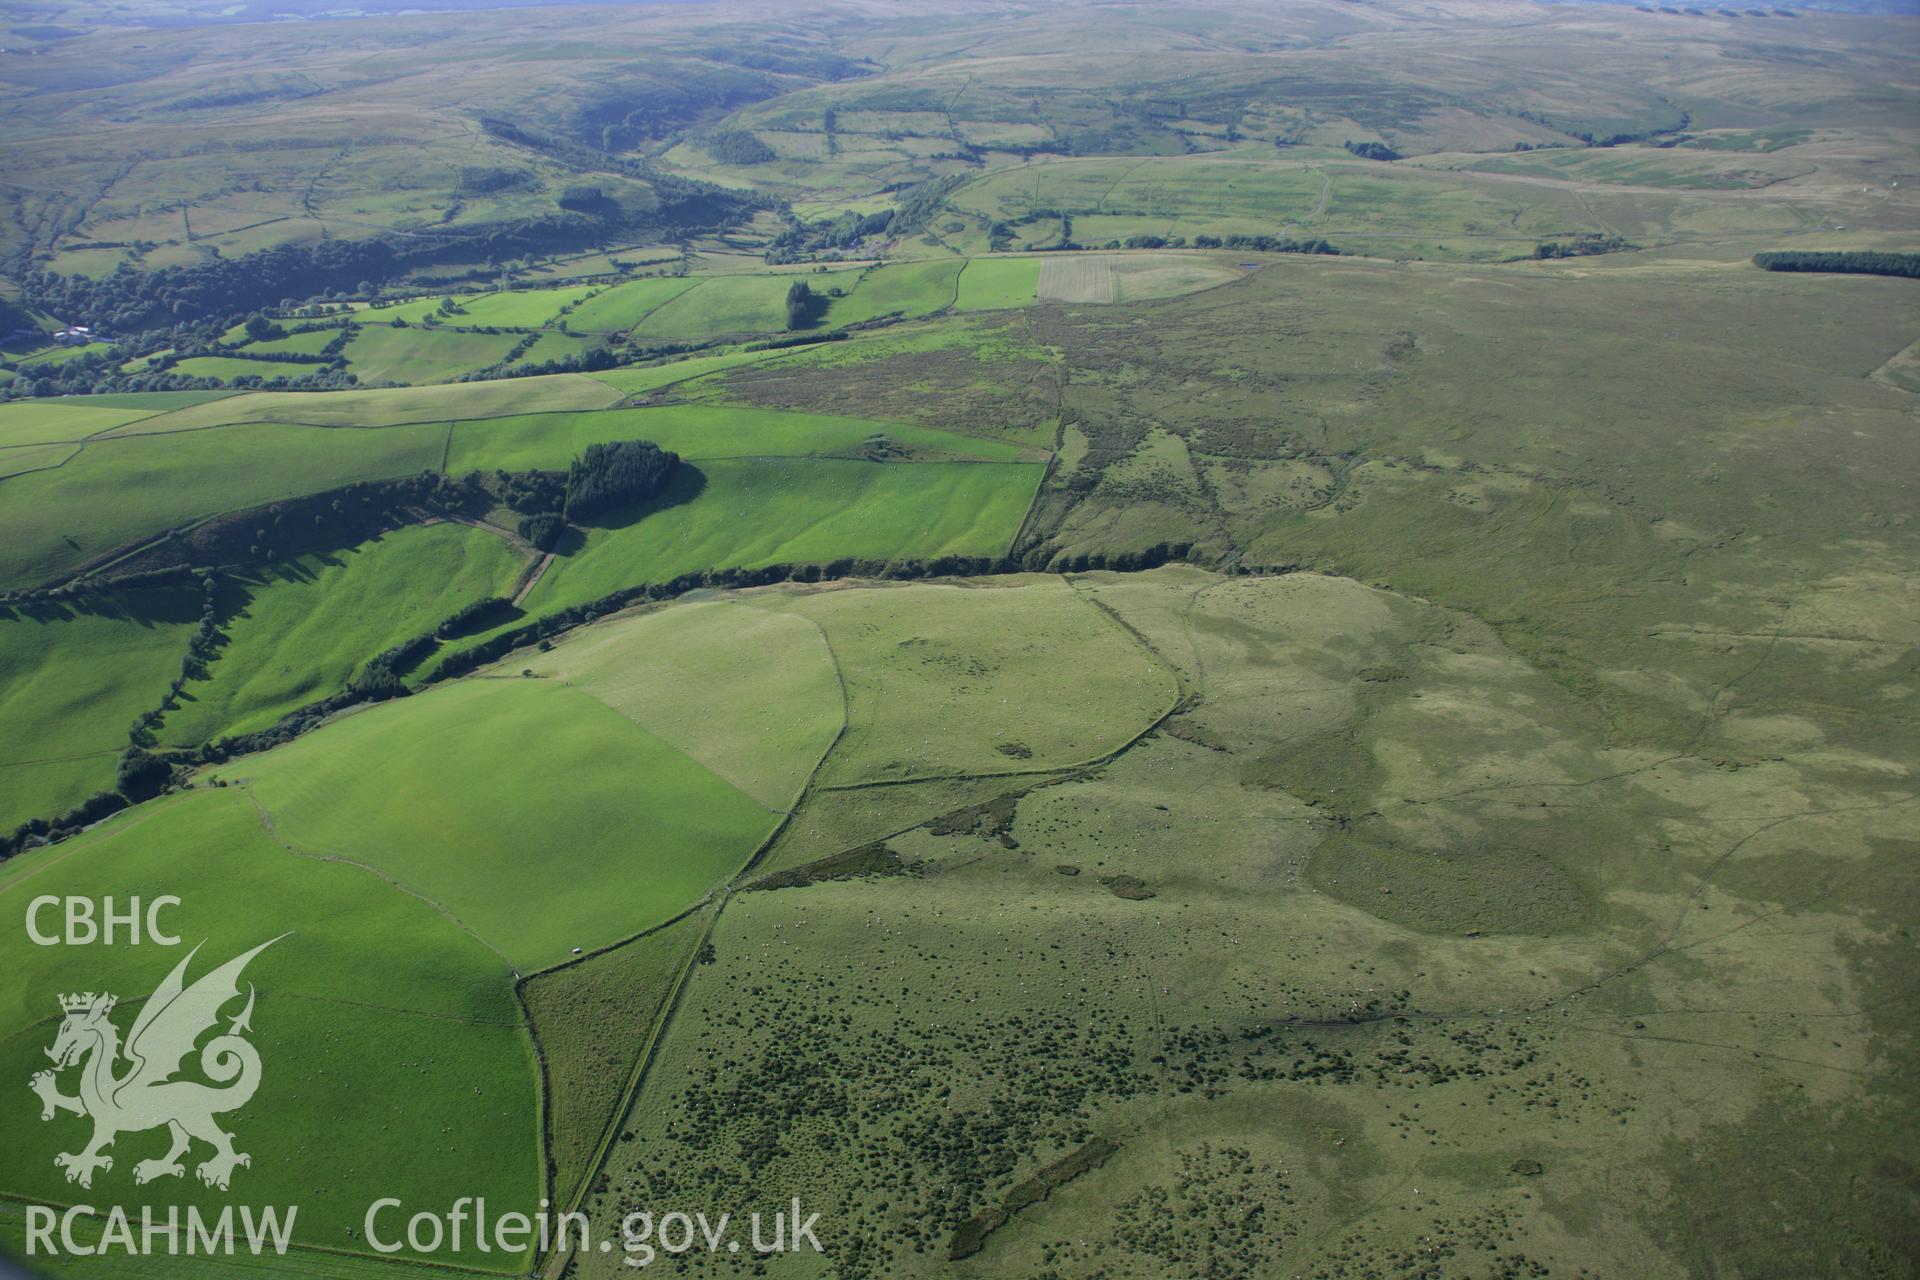 RCAHMW colour oblique aerial photograph of landscape near Garreg Fawr. Taken on 08 August 2007 by Toby Driver